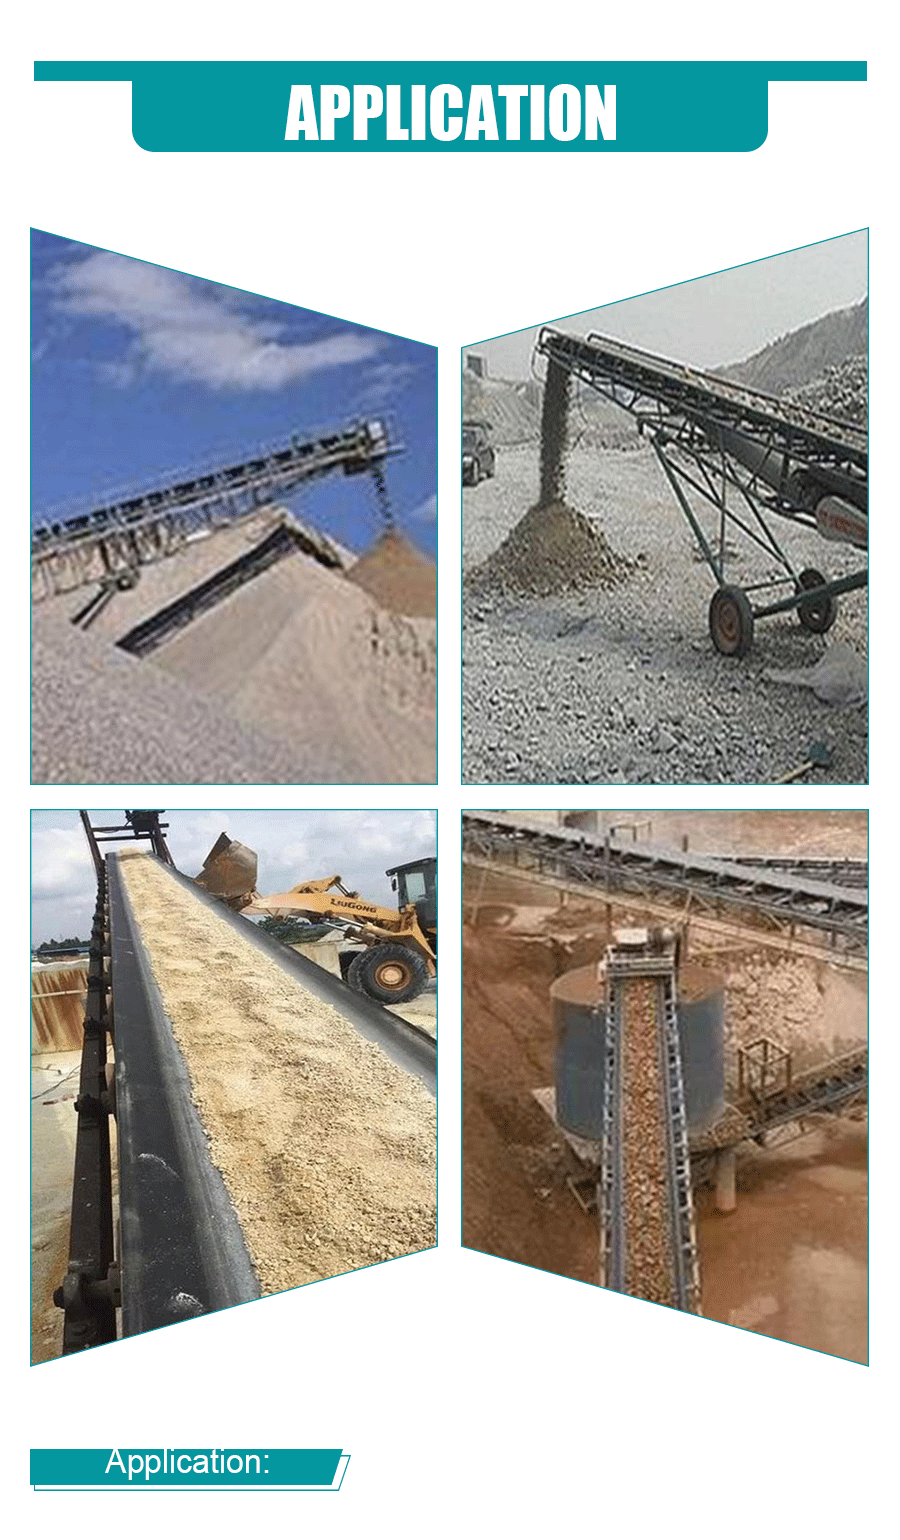 Conveyor belt for sand